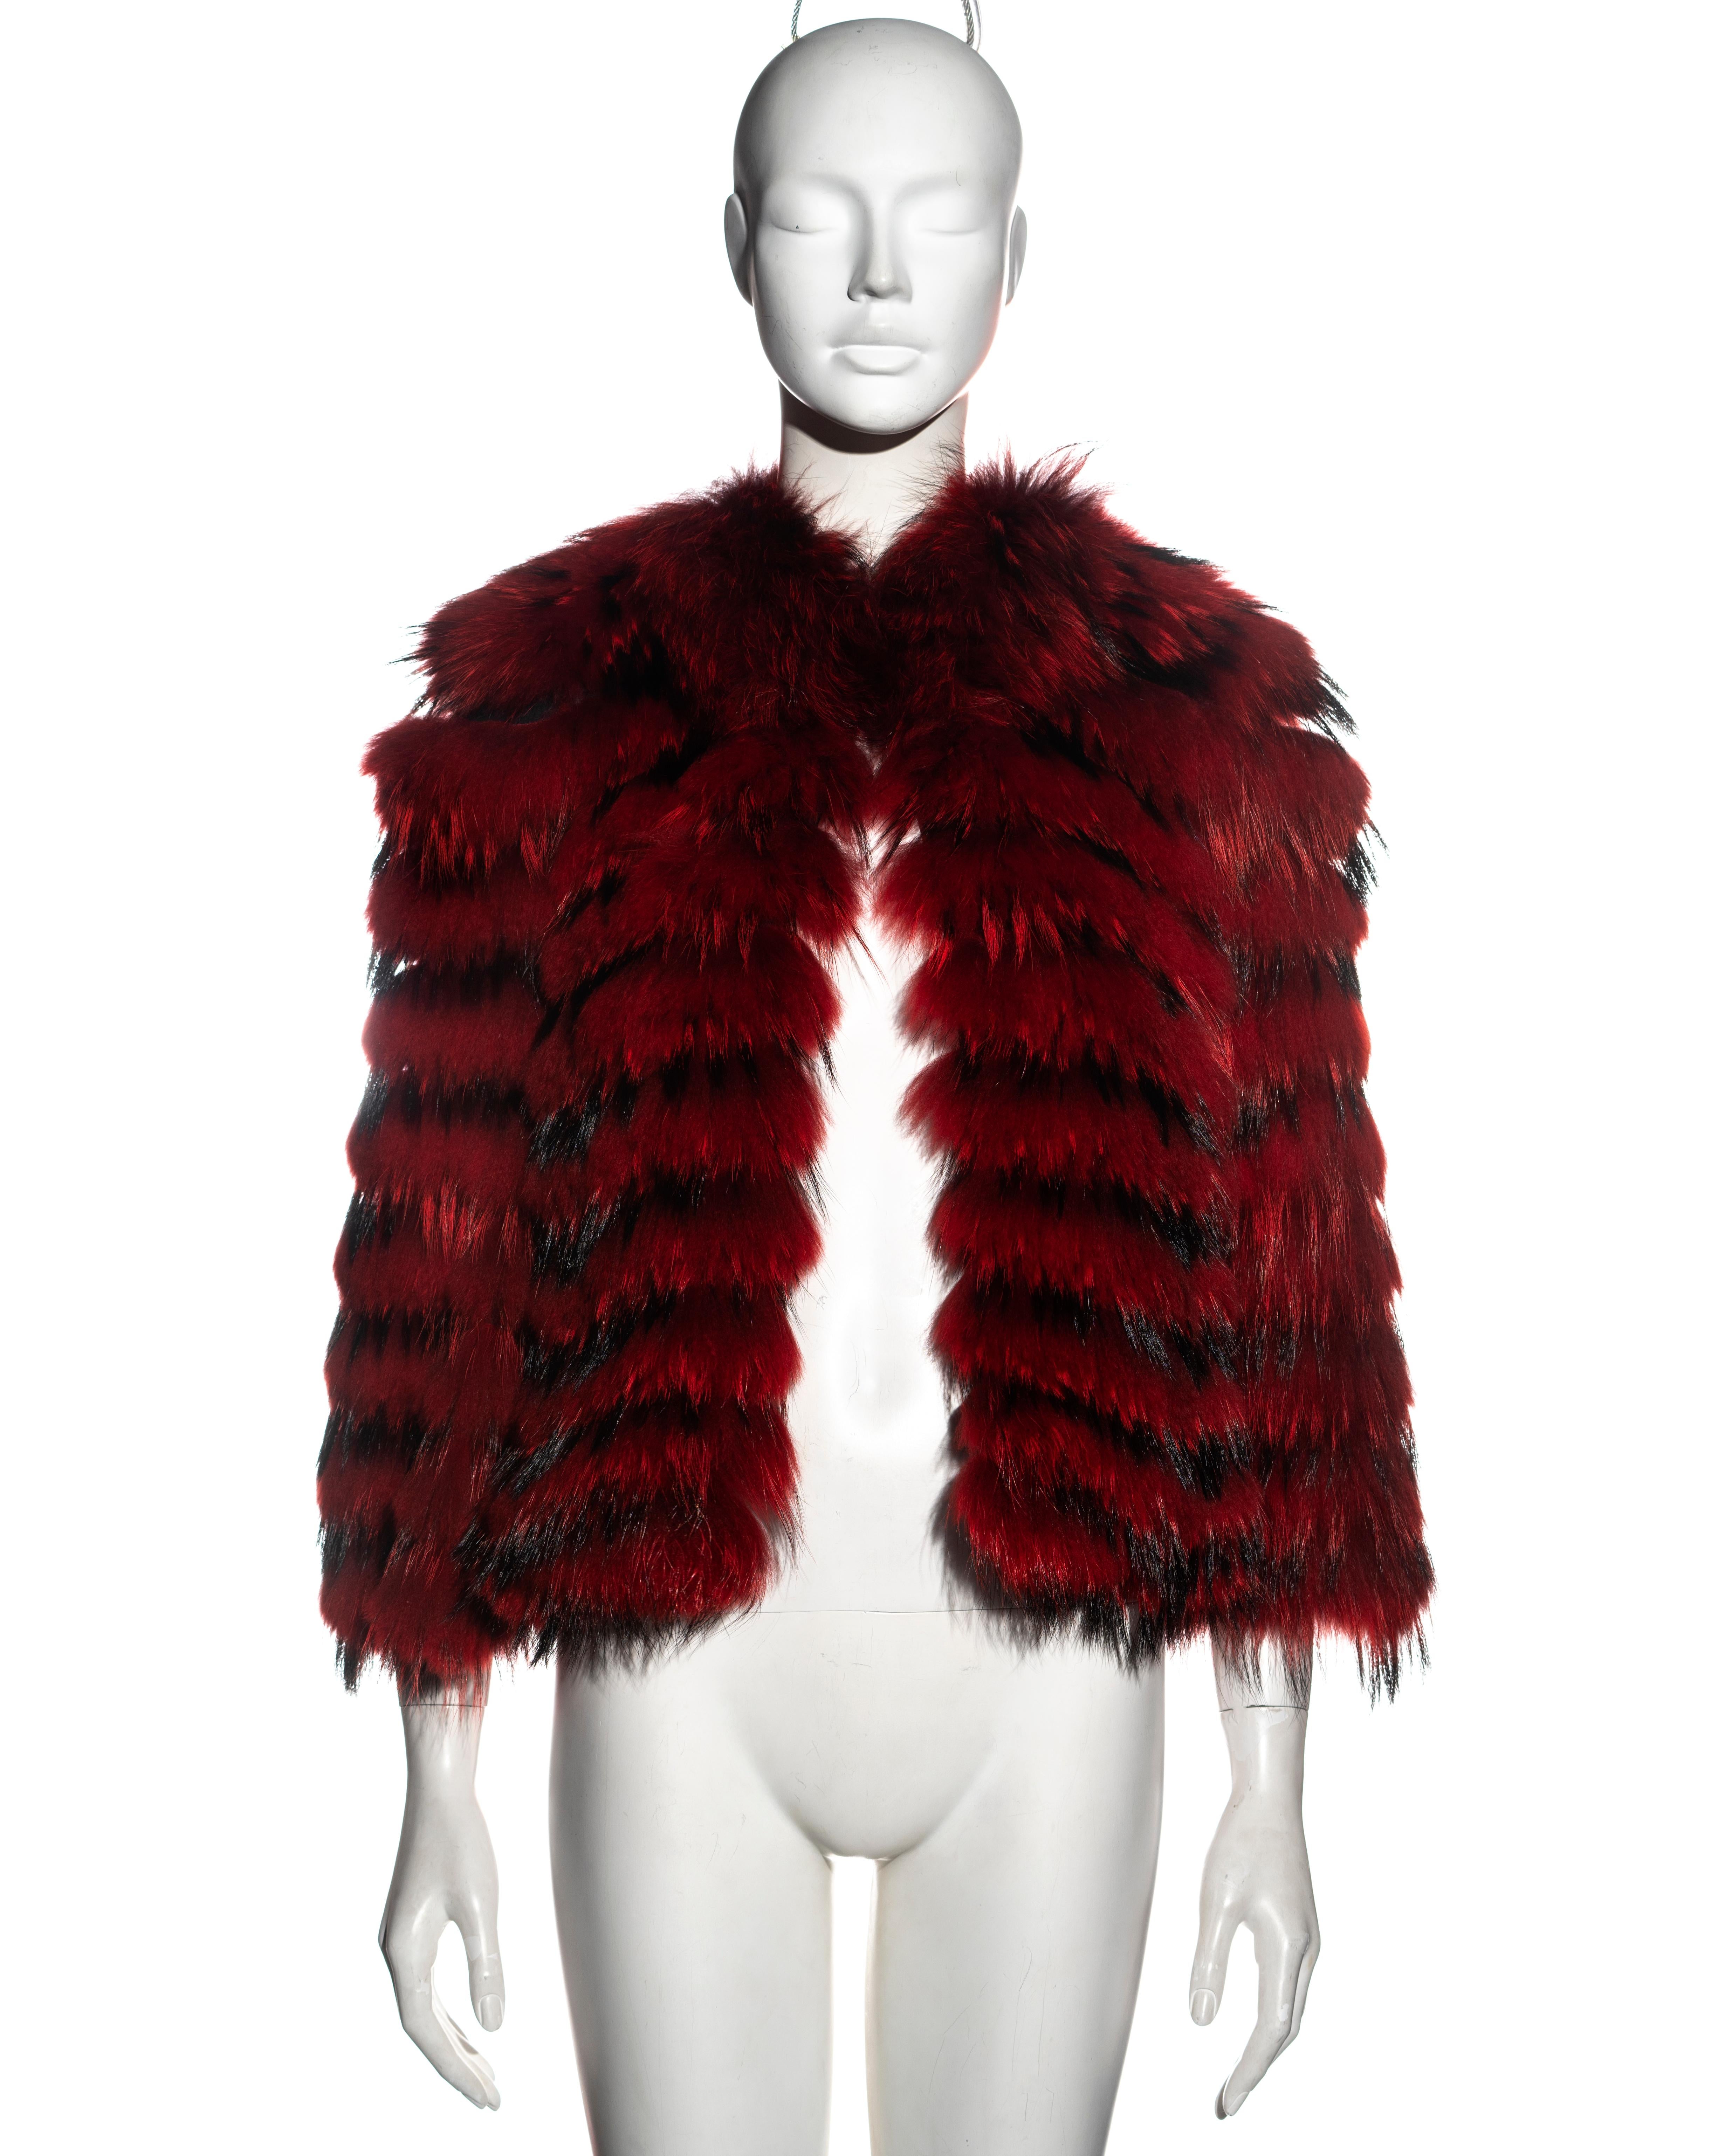 ▪ Dolce & Gabbana red fox fur jacket
▪ Fox fur ribbons 
▪ Cropped sleeves 
▪ Silk chiffon lining
▪ IT 40 - FR 36 - UK 8
▪ Fall-Winter 1999
▪ 100% Fox  Lining: 100% Silk
▪ Made in Italy